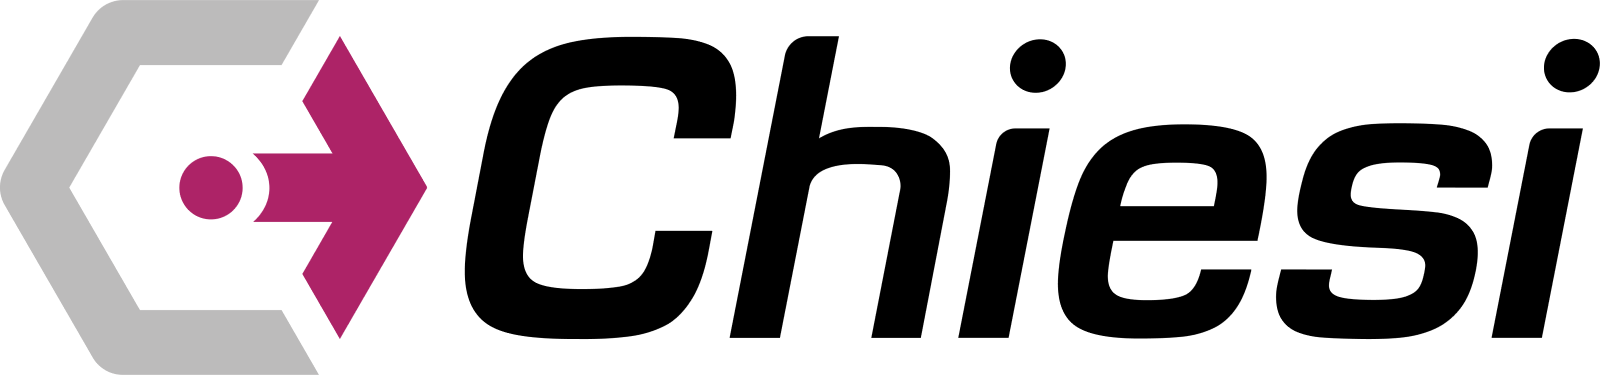 Logo CHIESI GROUP